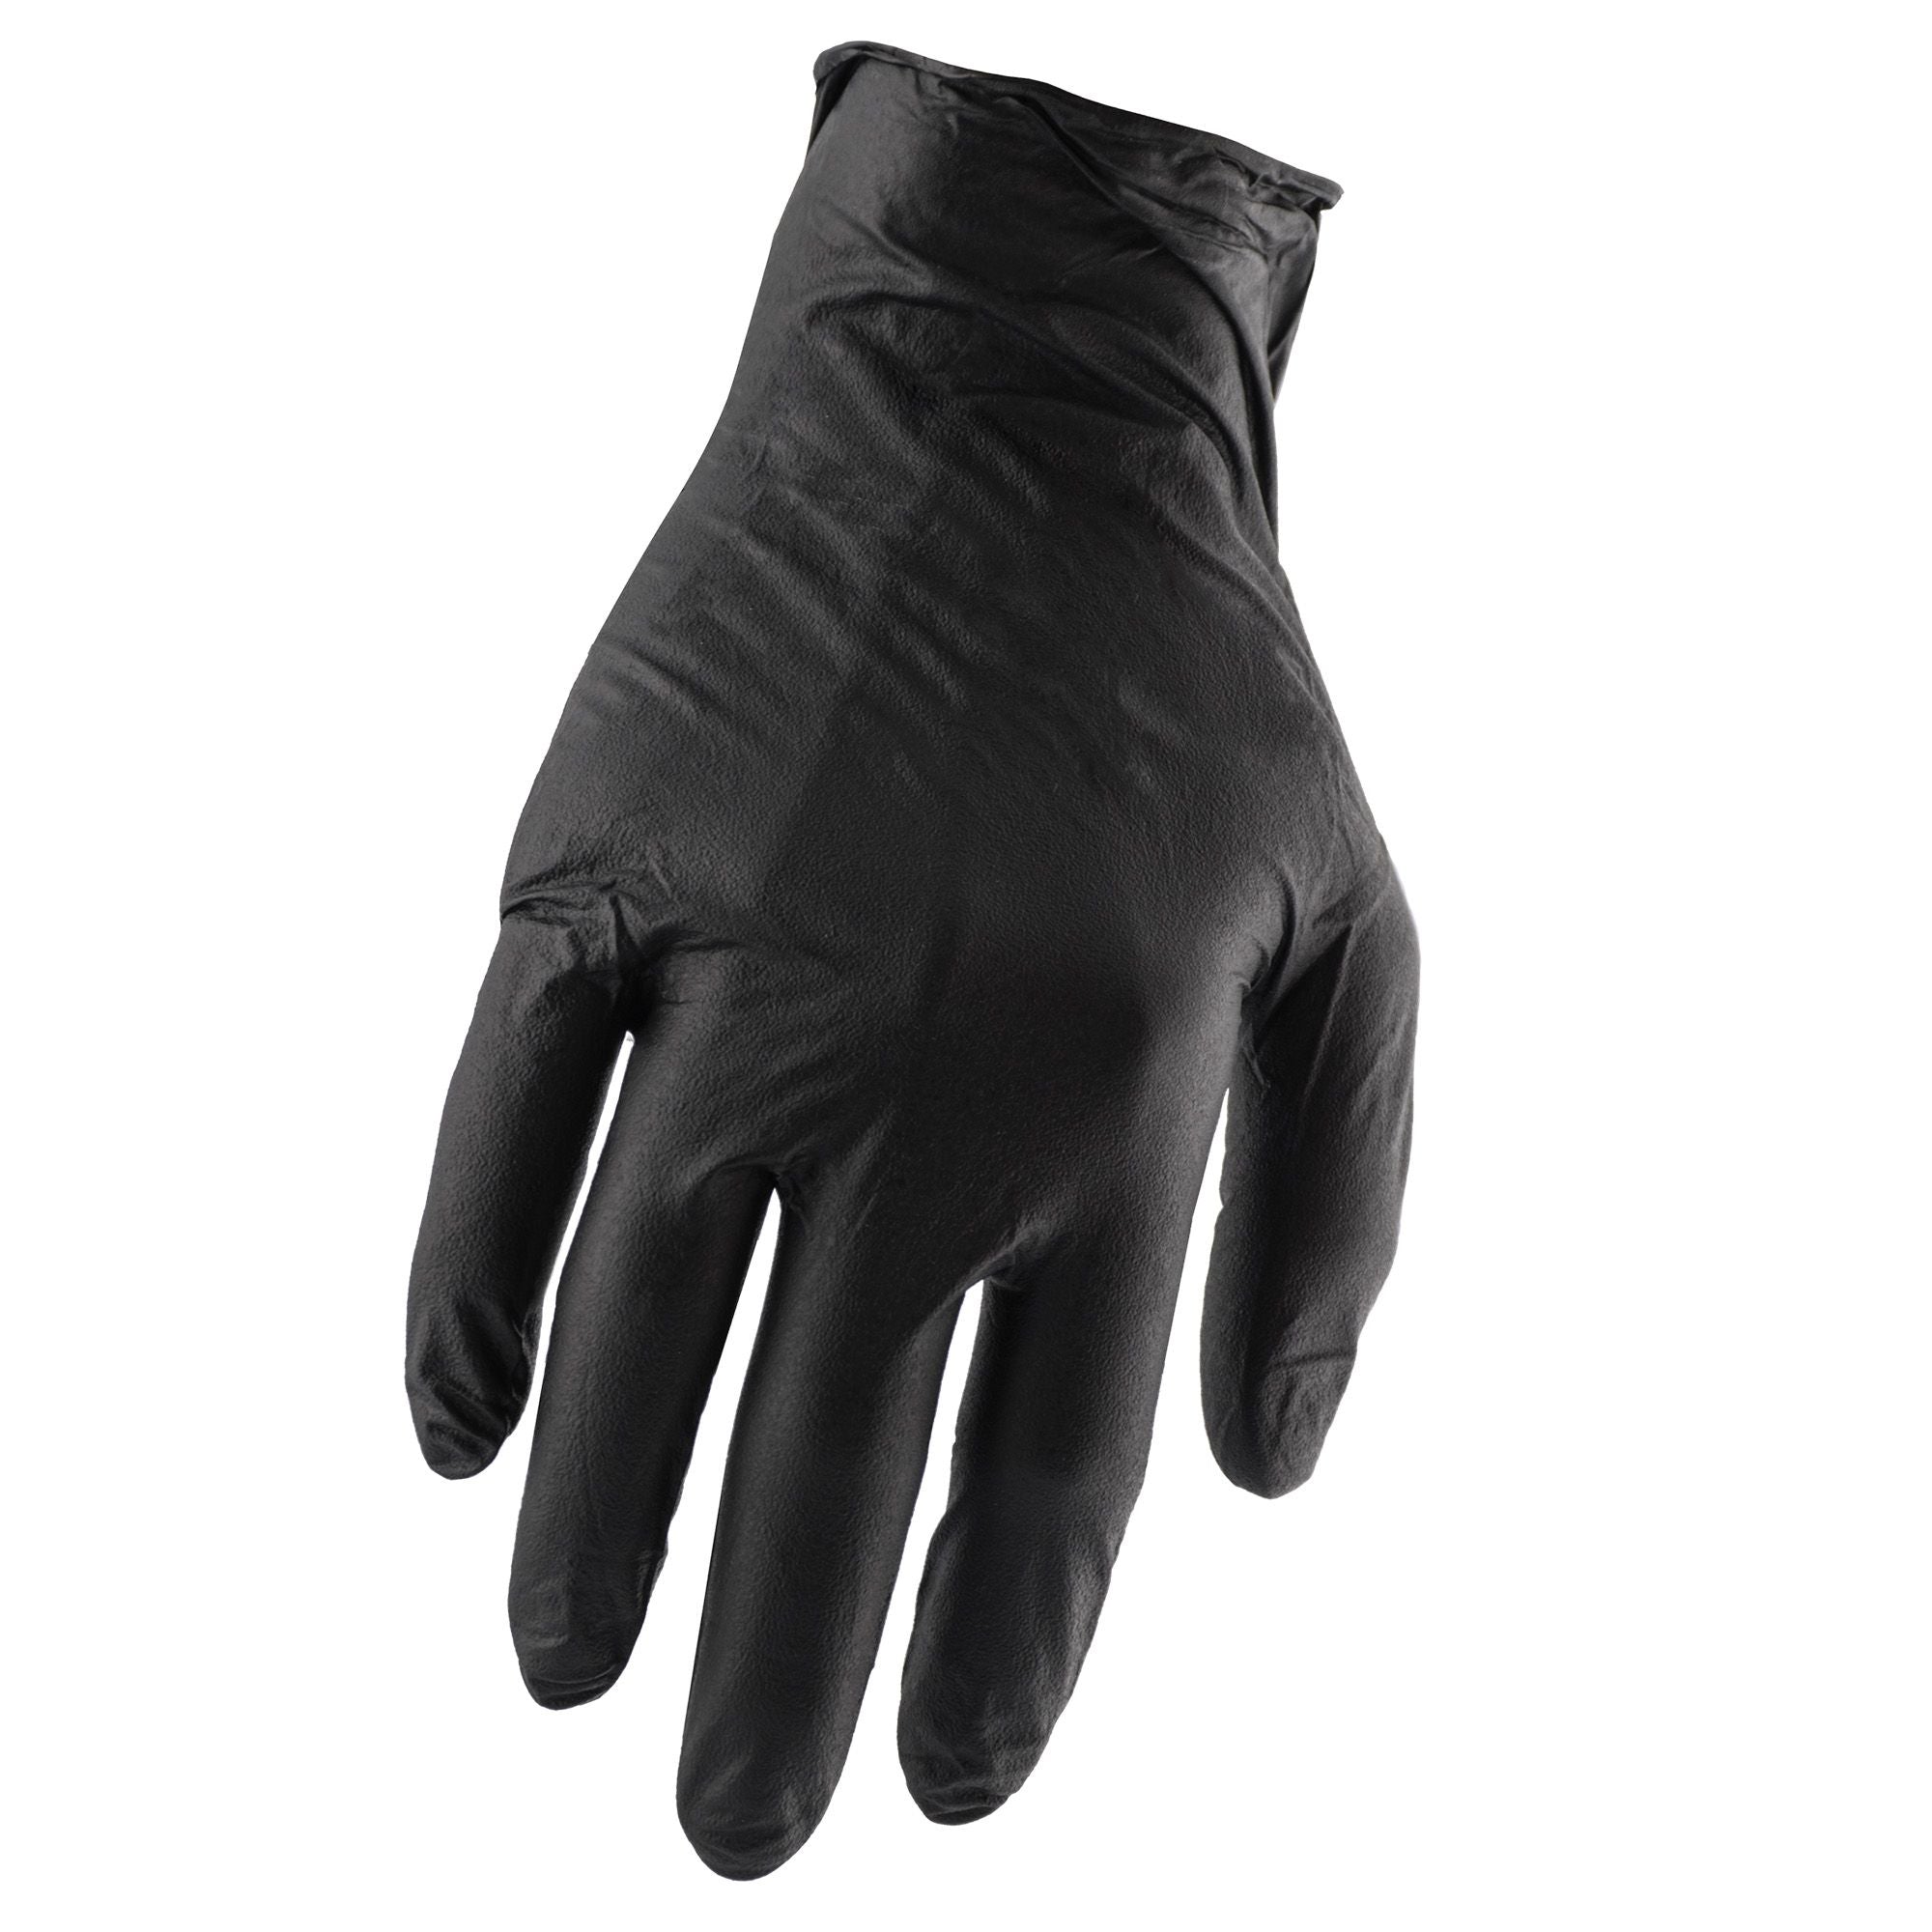 Horizon Black Extra Strong 6-mil Nitrile Disposable Powder-Free Work Gloves - Box of 100